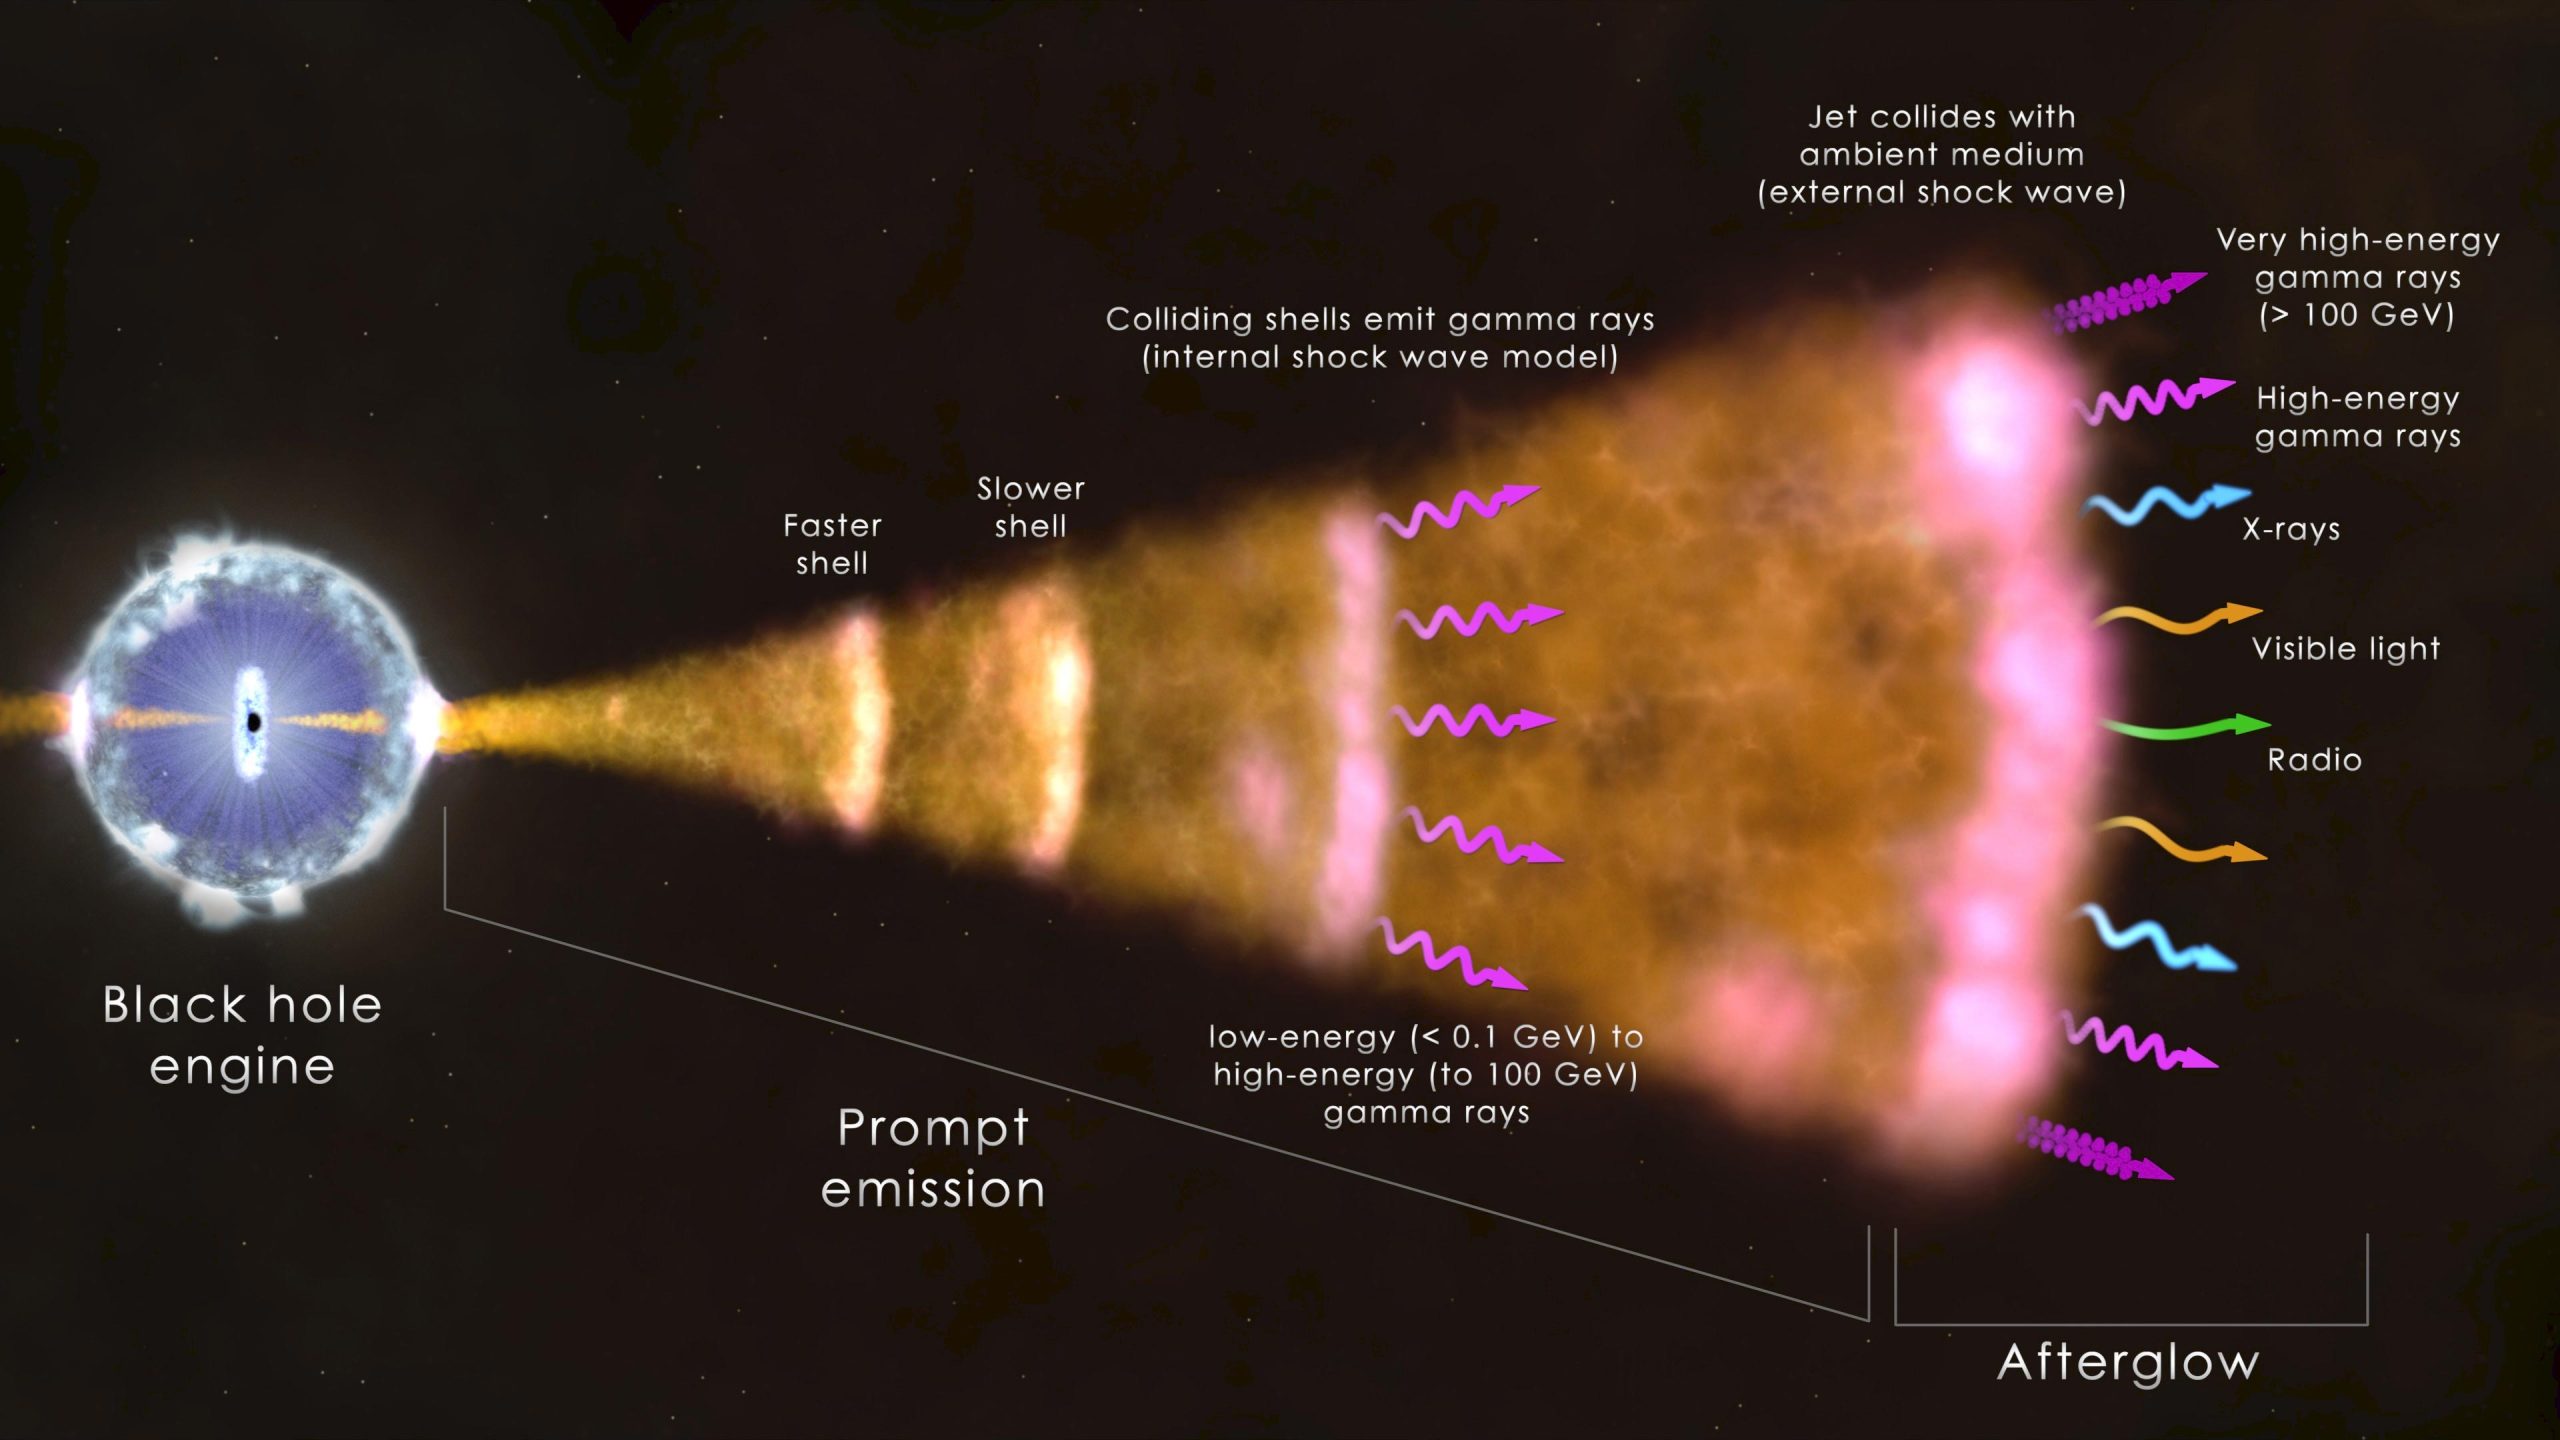 New Era In Gamma Ray Science With Nasa Fermi Swift Missions